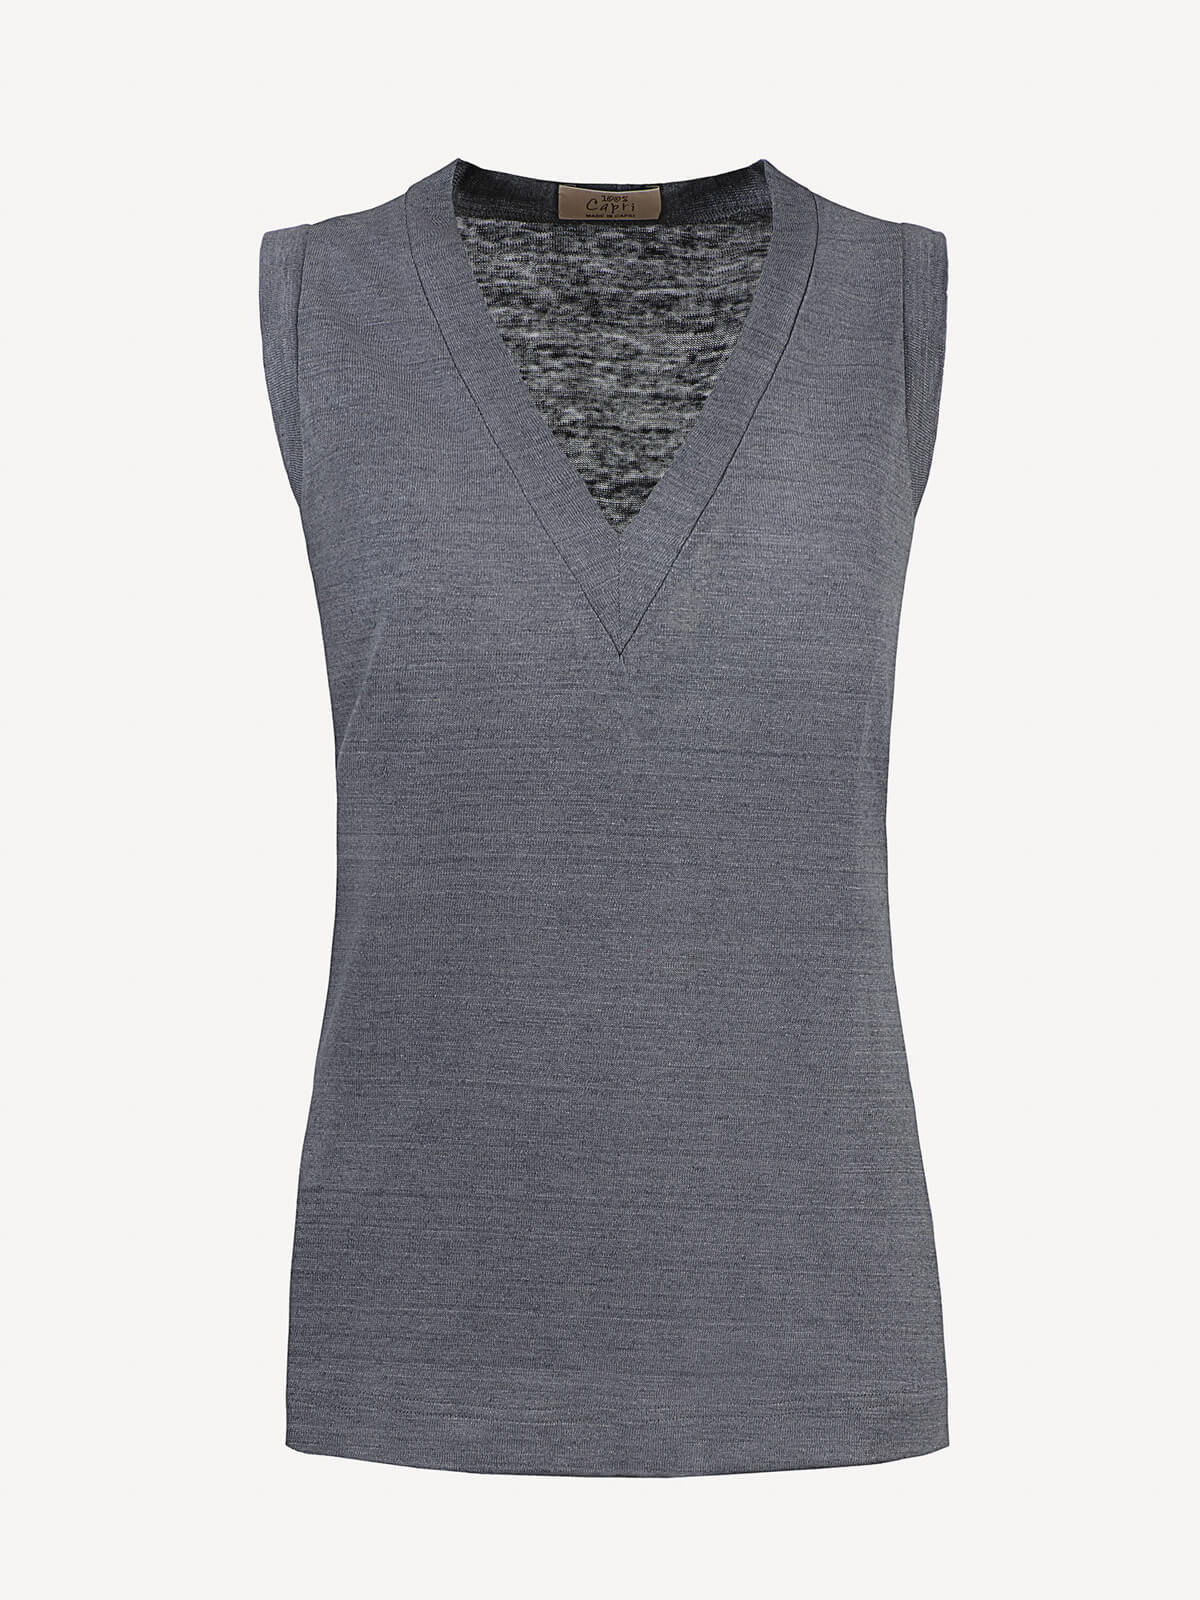 Top V for Woman linen dark grey top front 100% Capri